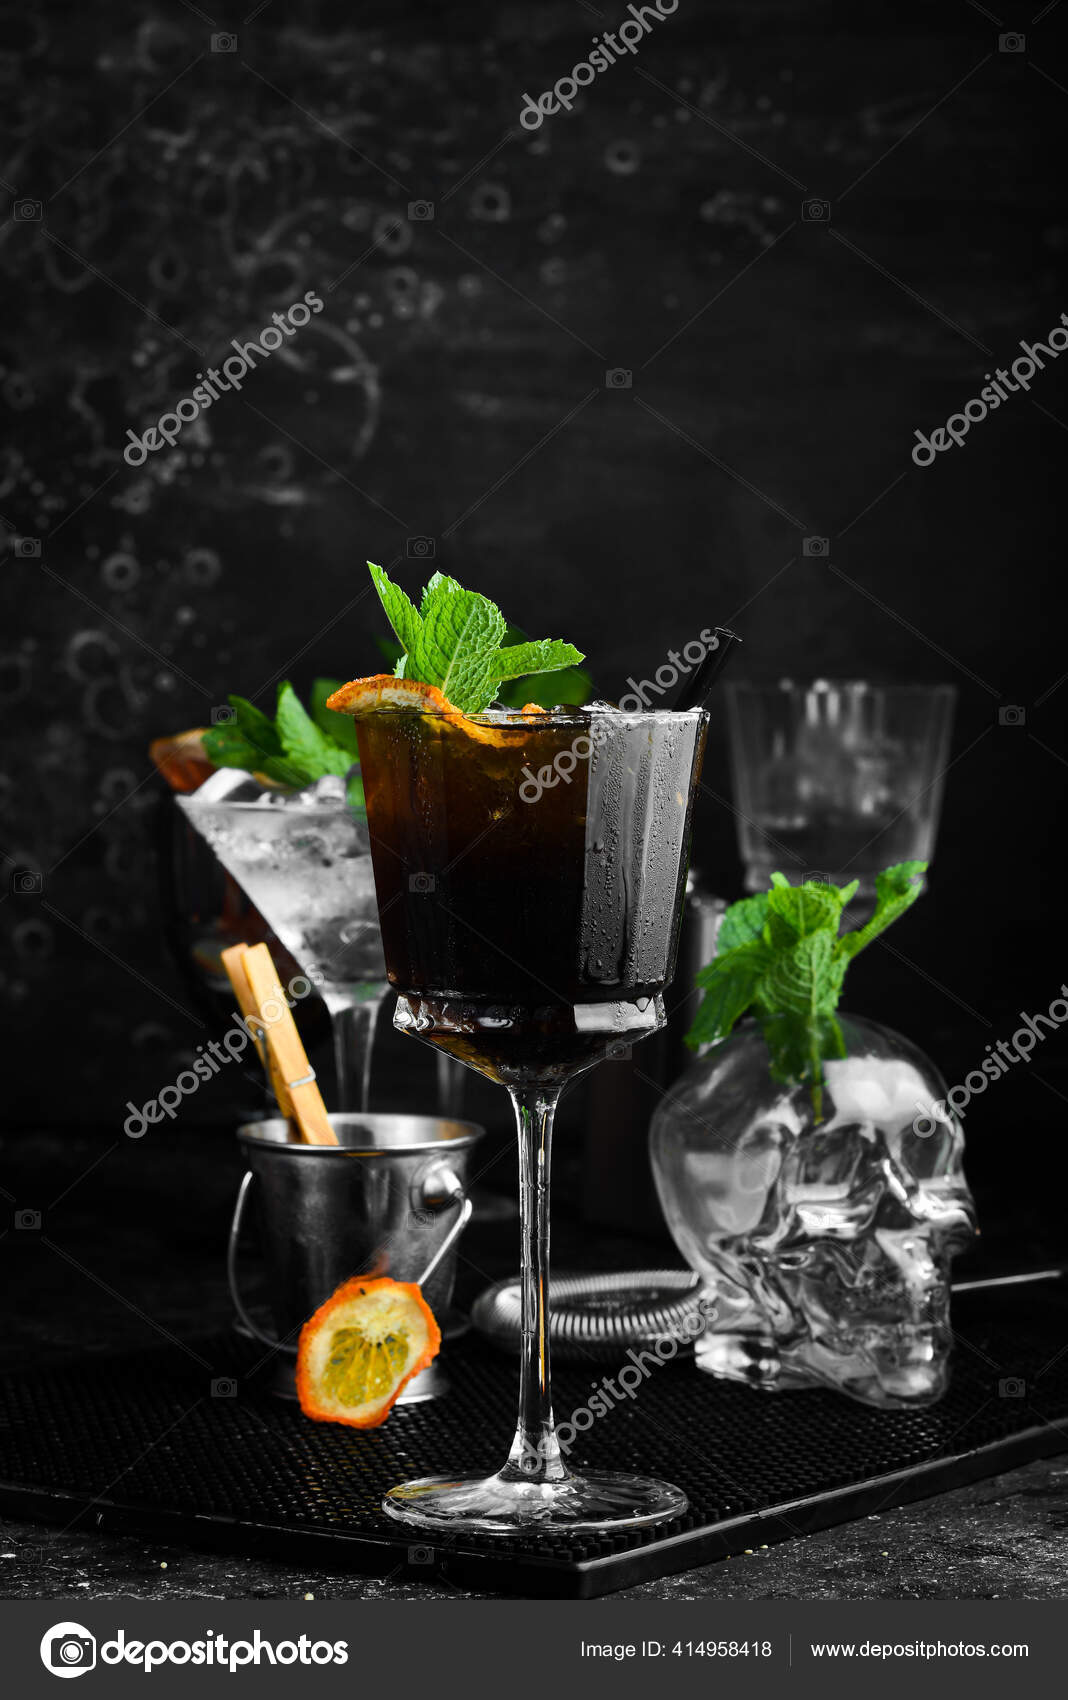 https://st4.depositphotos.com/4590583/41495/i/1600/depositphotos_414958418-stock-photo-cocktail-cola-rum-cola-mint.jpg